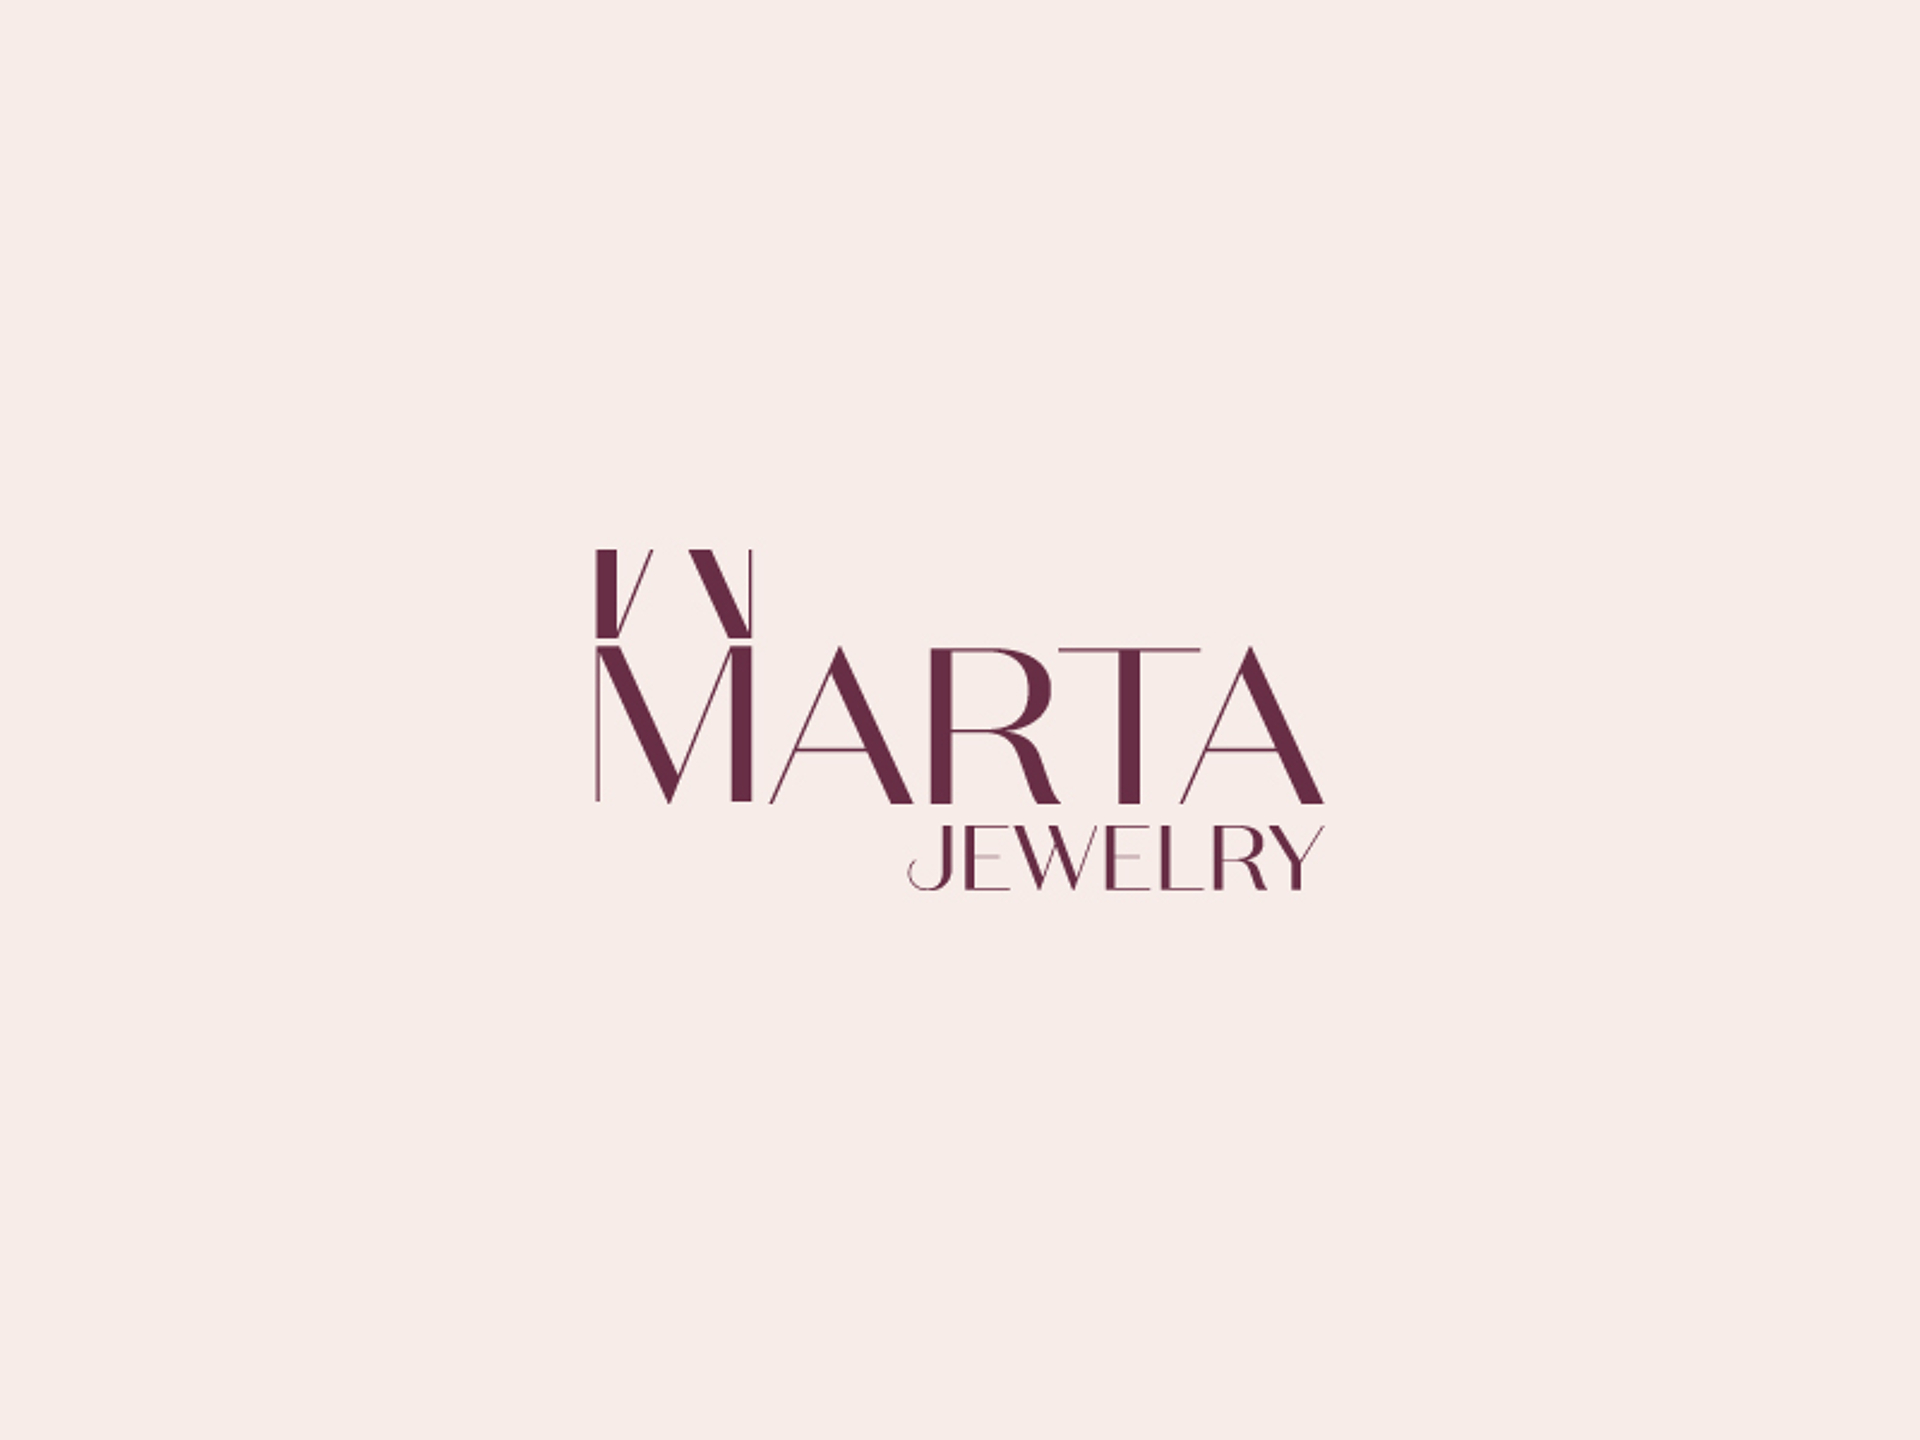 mmarta-jewelry